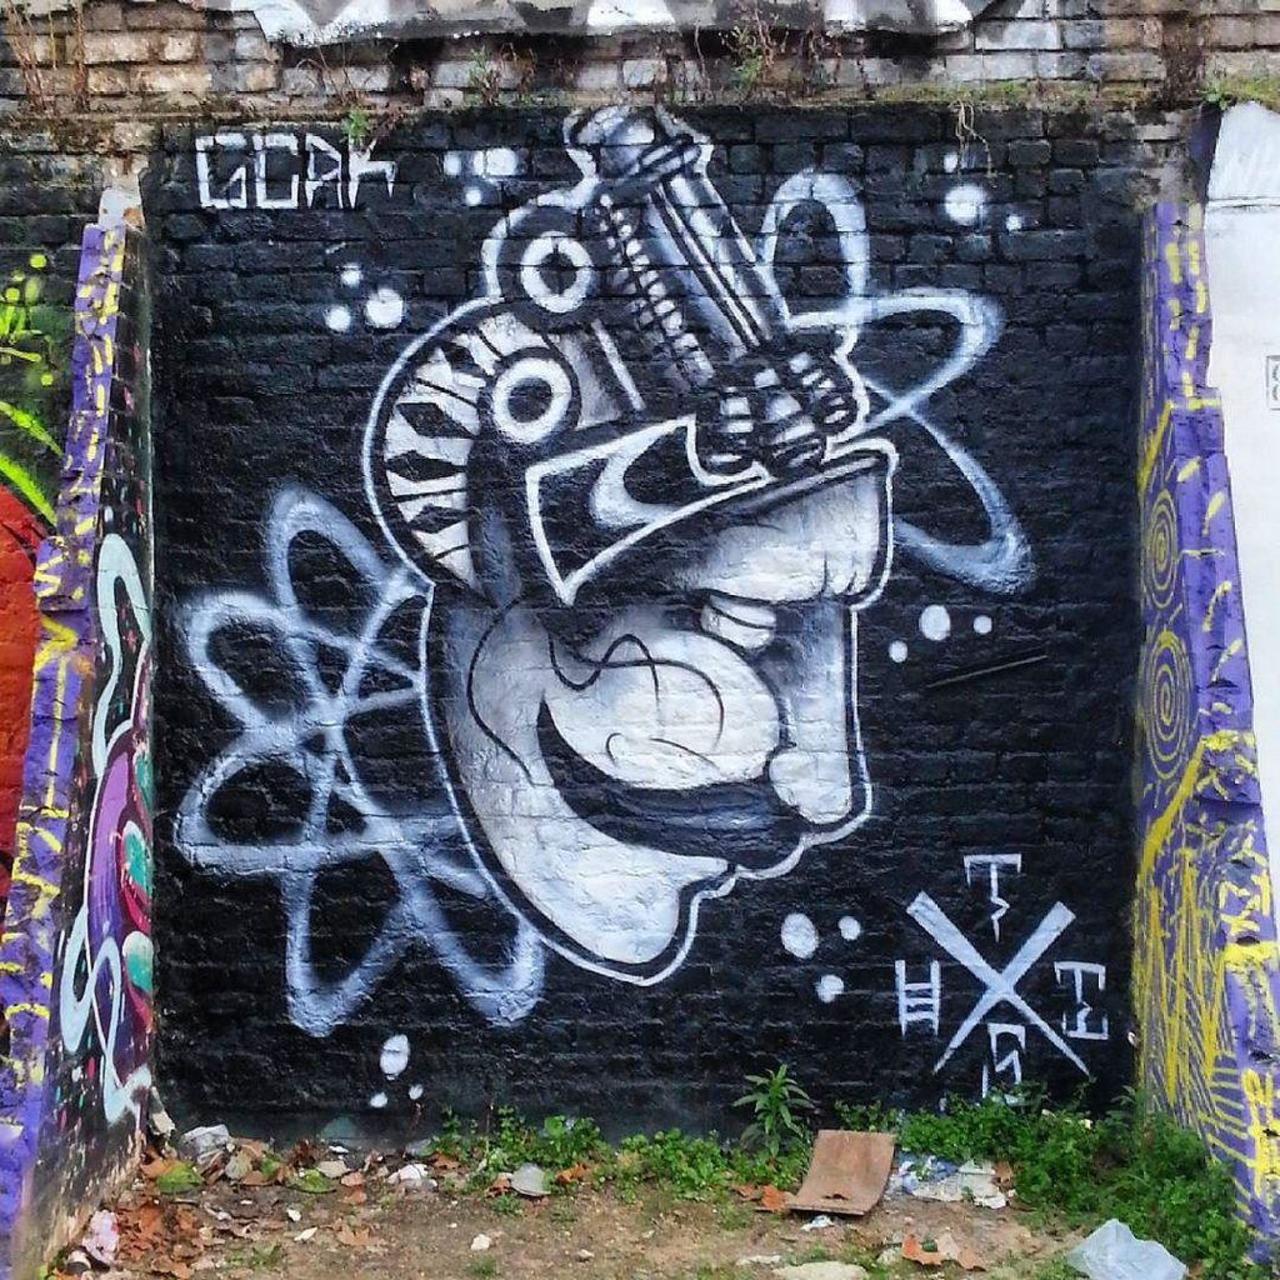 Art by This One  
#Graffiti #StreetArt #UrbanArt #ThisOneArt #StarYard #BrickLane #Shoreditch #London #GalaxyS3 #t… http://t.co/6PPt82XySs